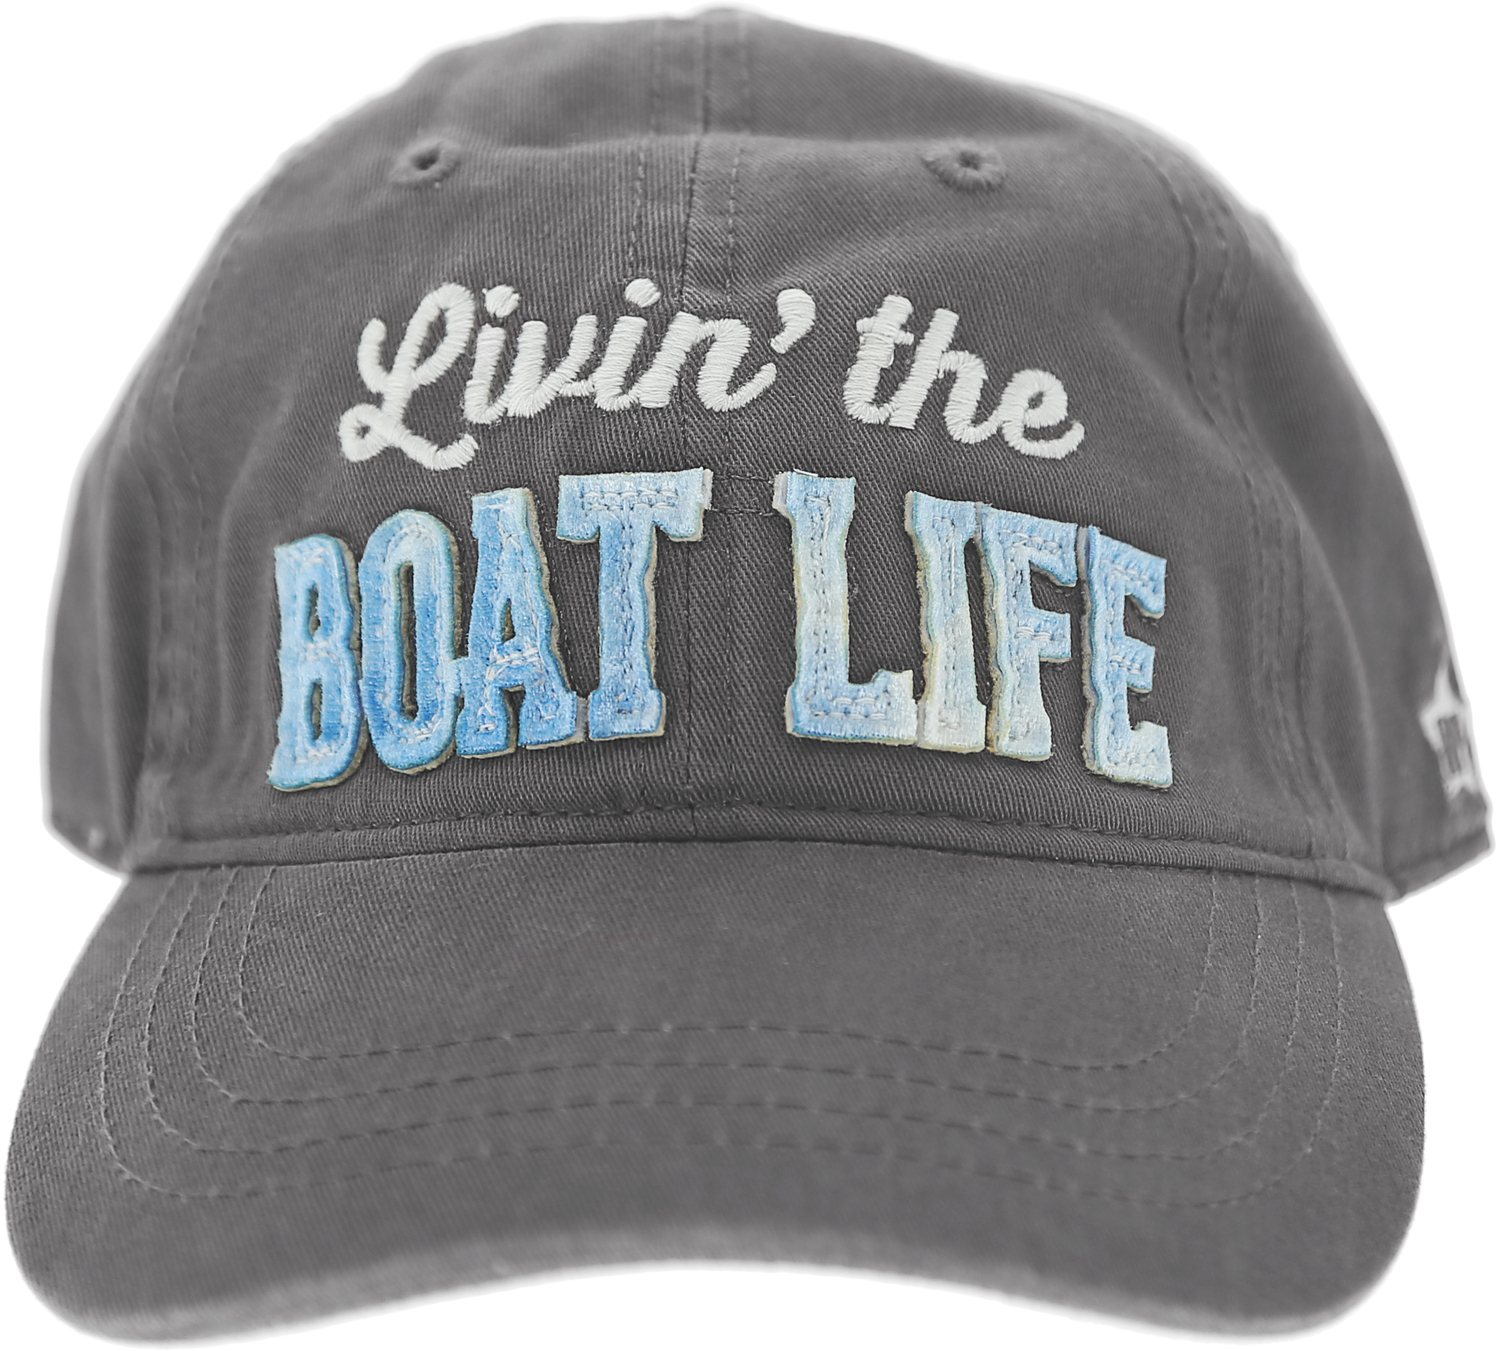 Boat by We People - Boat - Dark Gray Adjustable Hat